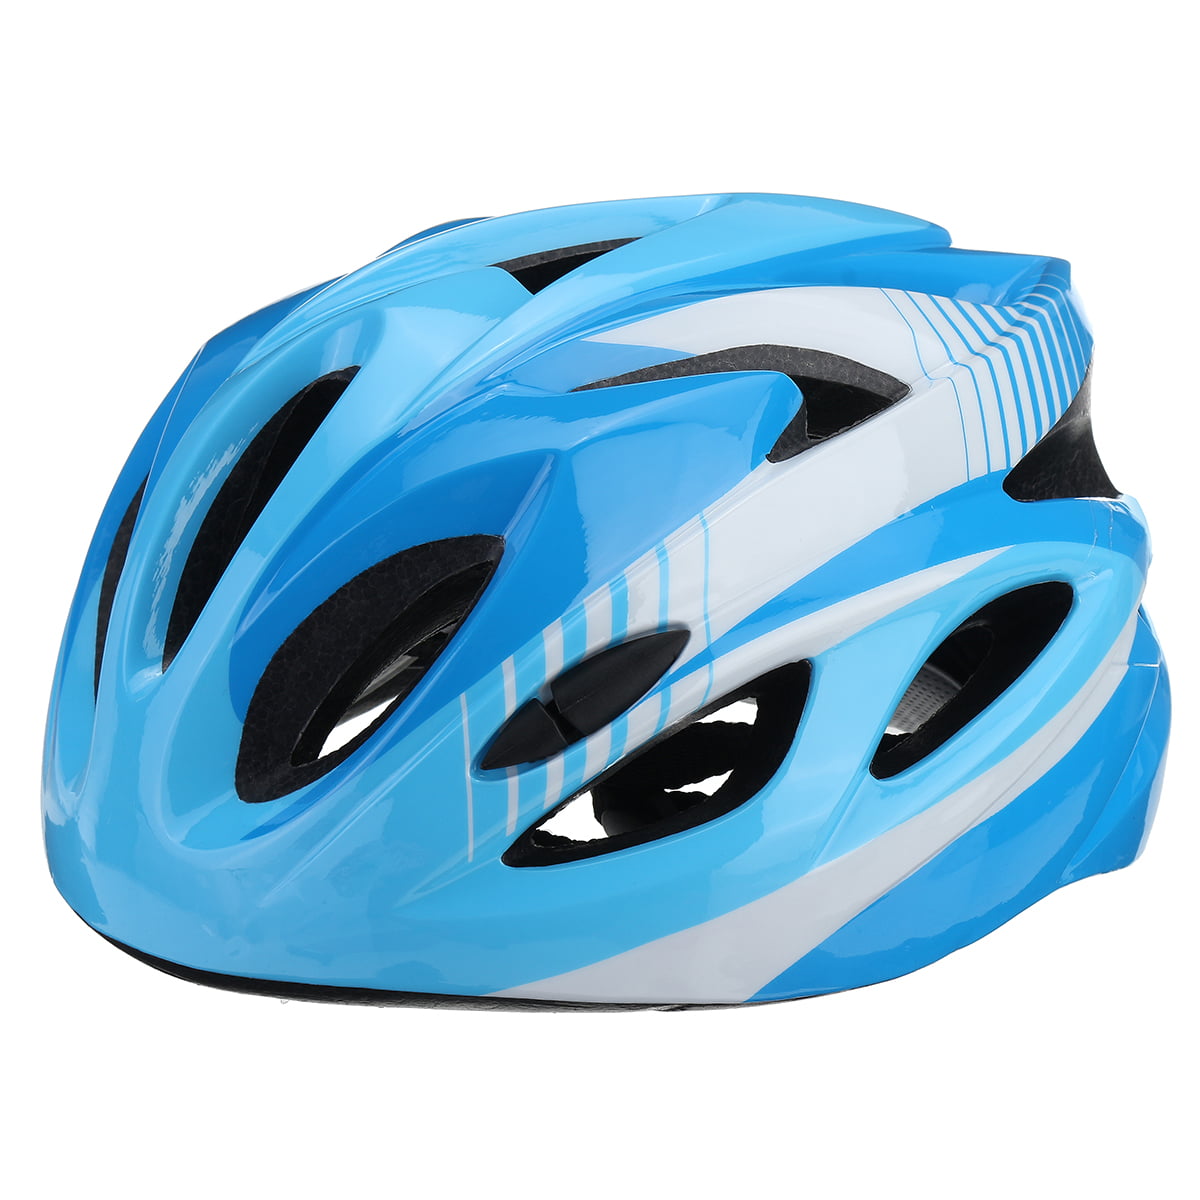 Pro Kid Children Bike Helmet Ultralight Safety Bicycle Cycling Helmet Ultralight 